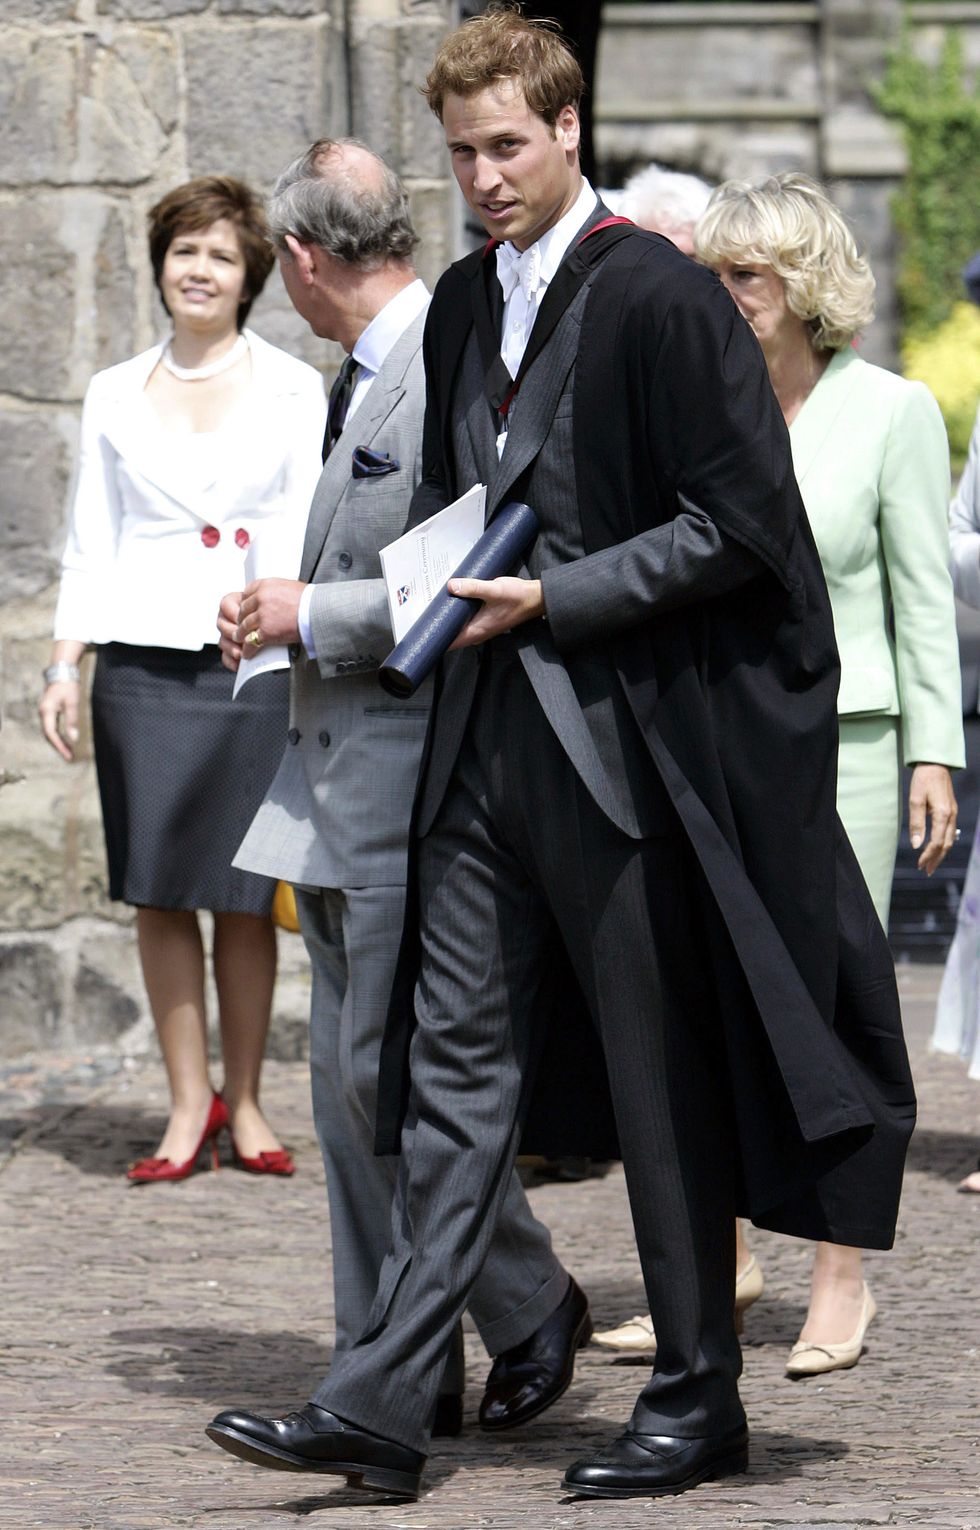 Prince William Graduation Ceremony At St Andrew's